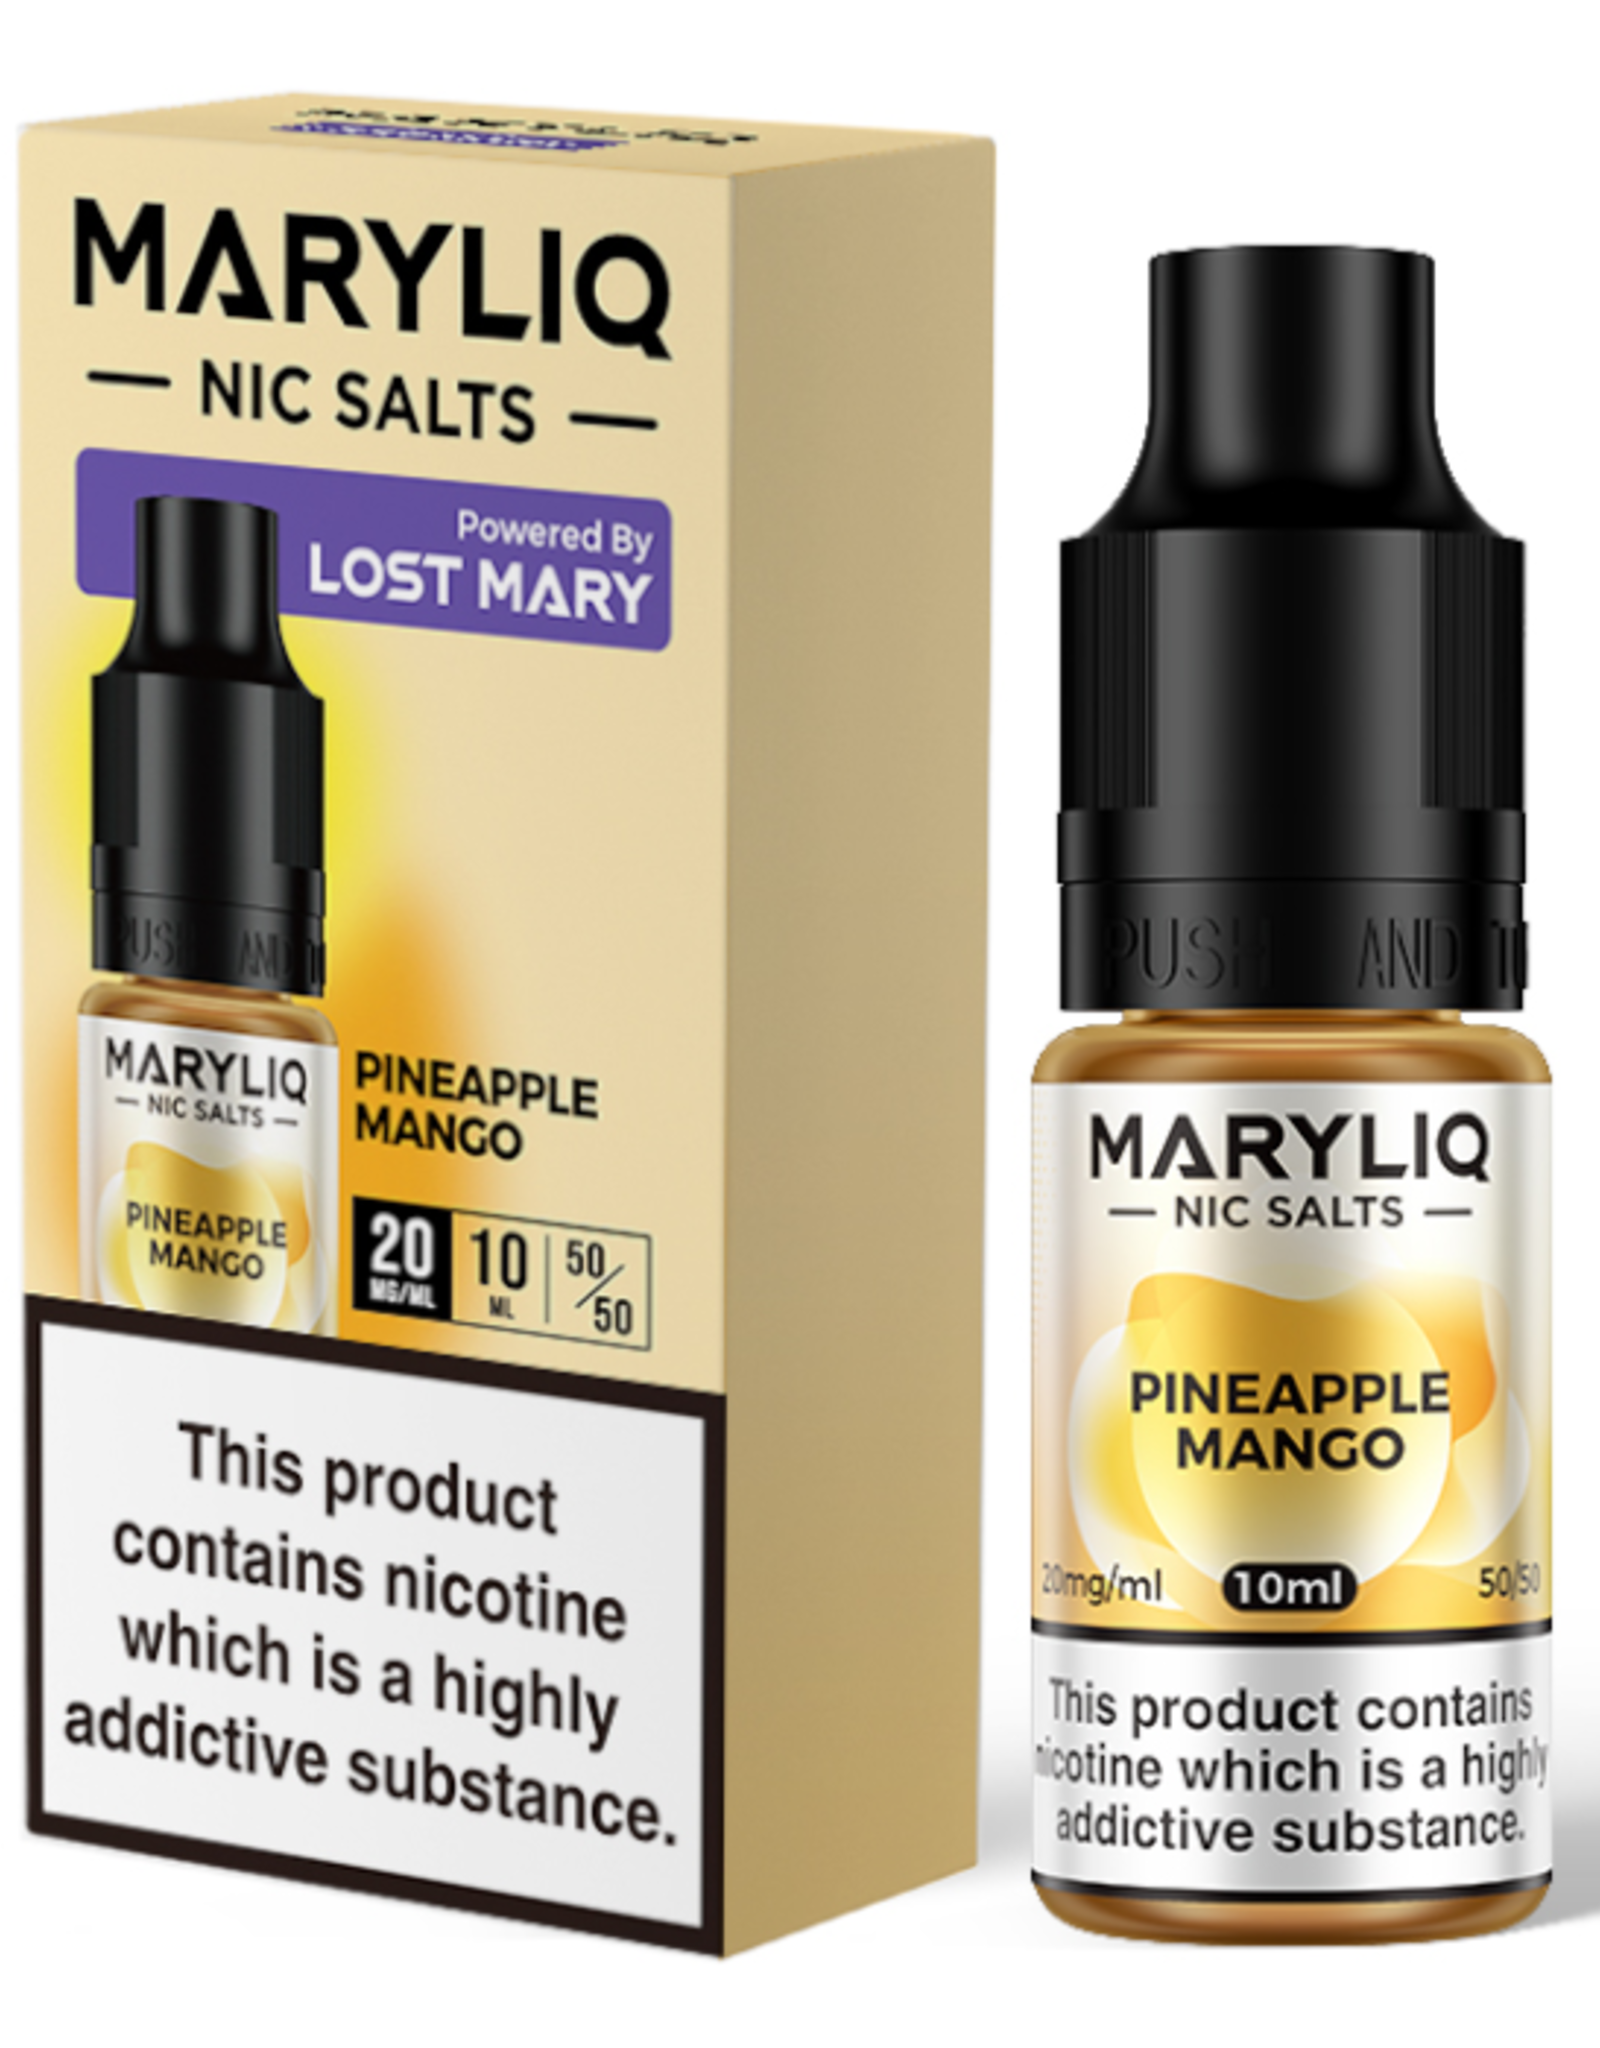 Lost Mary Lost Mary MARYLIQ Nic Salts - Pineapple Mango - 10ml